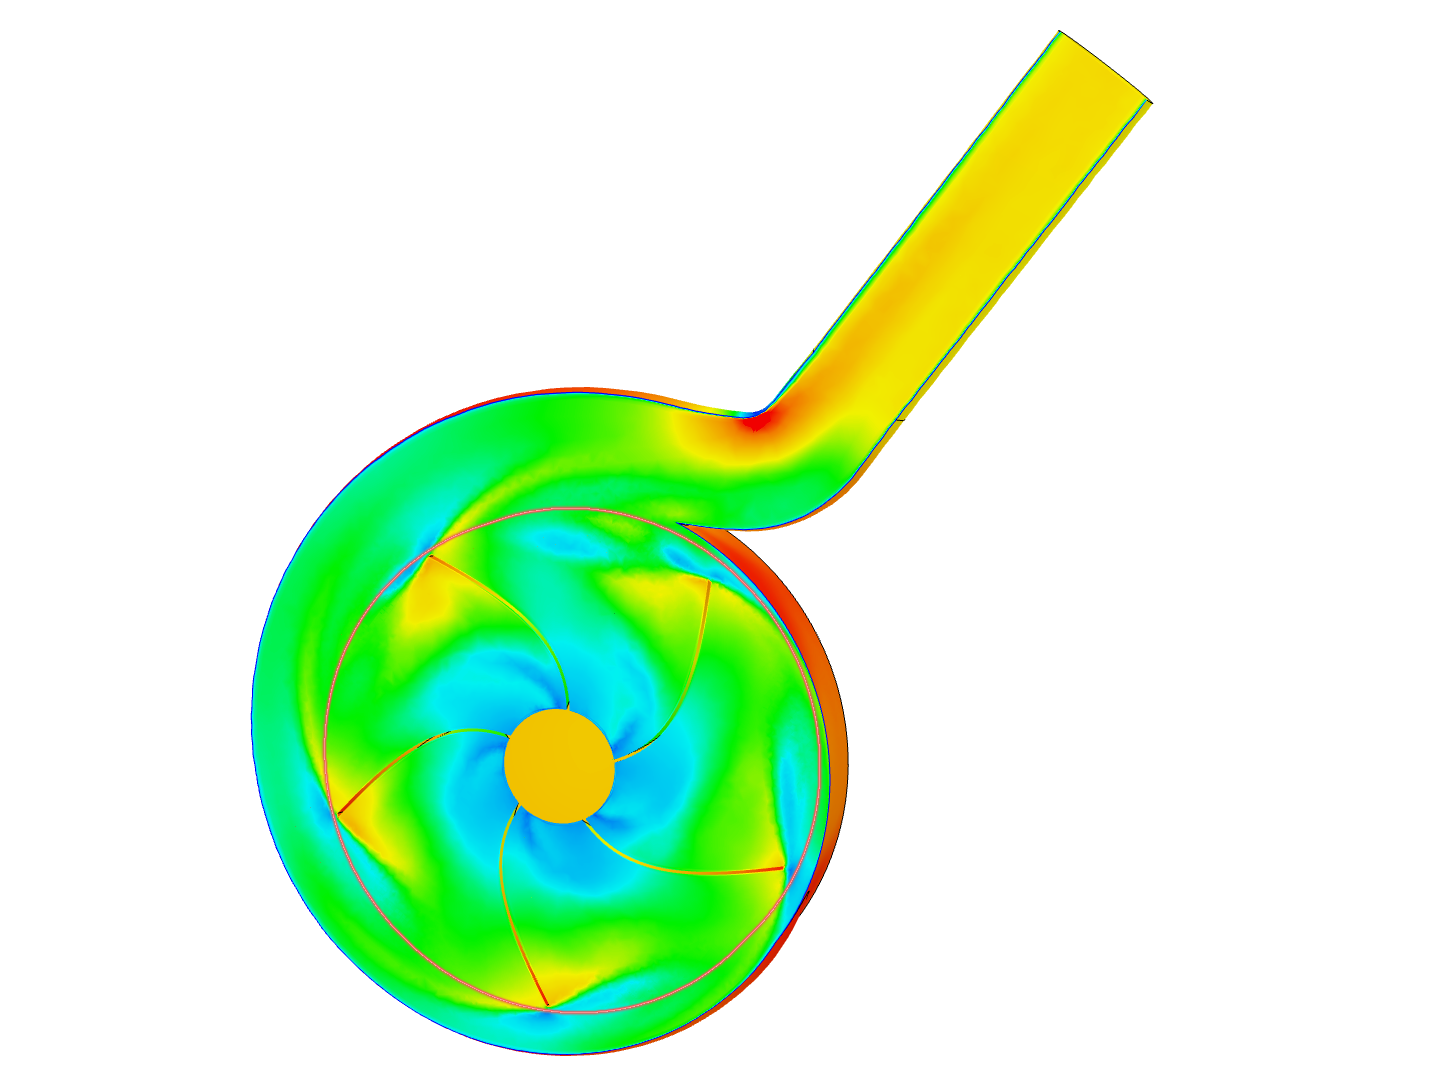 centrifugal pump for coursera image